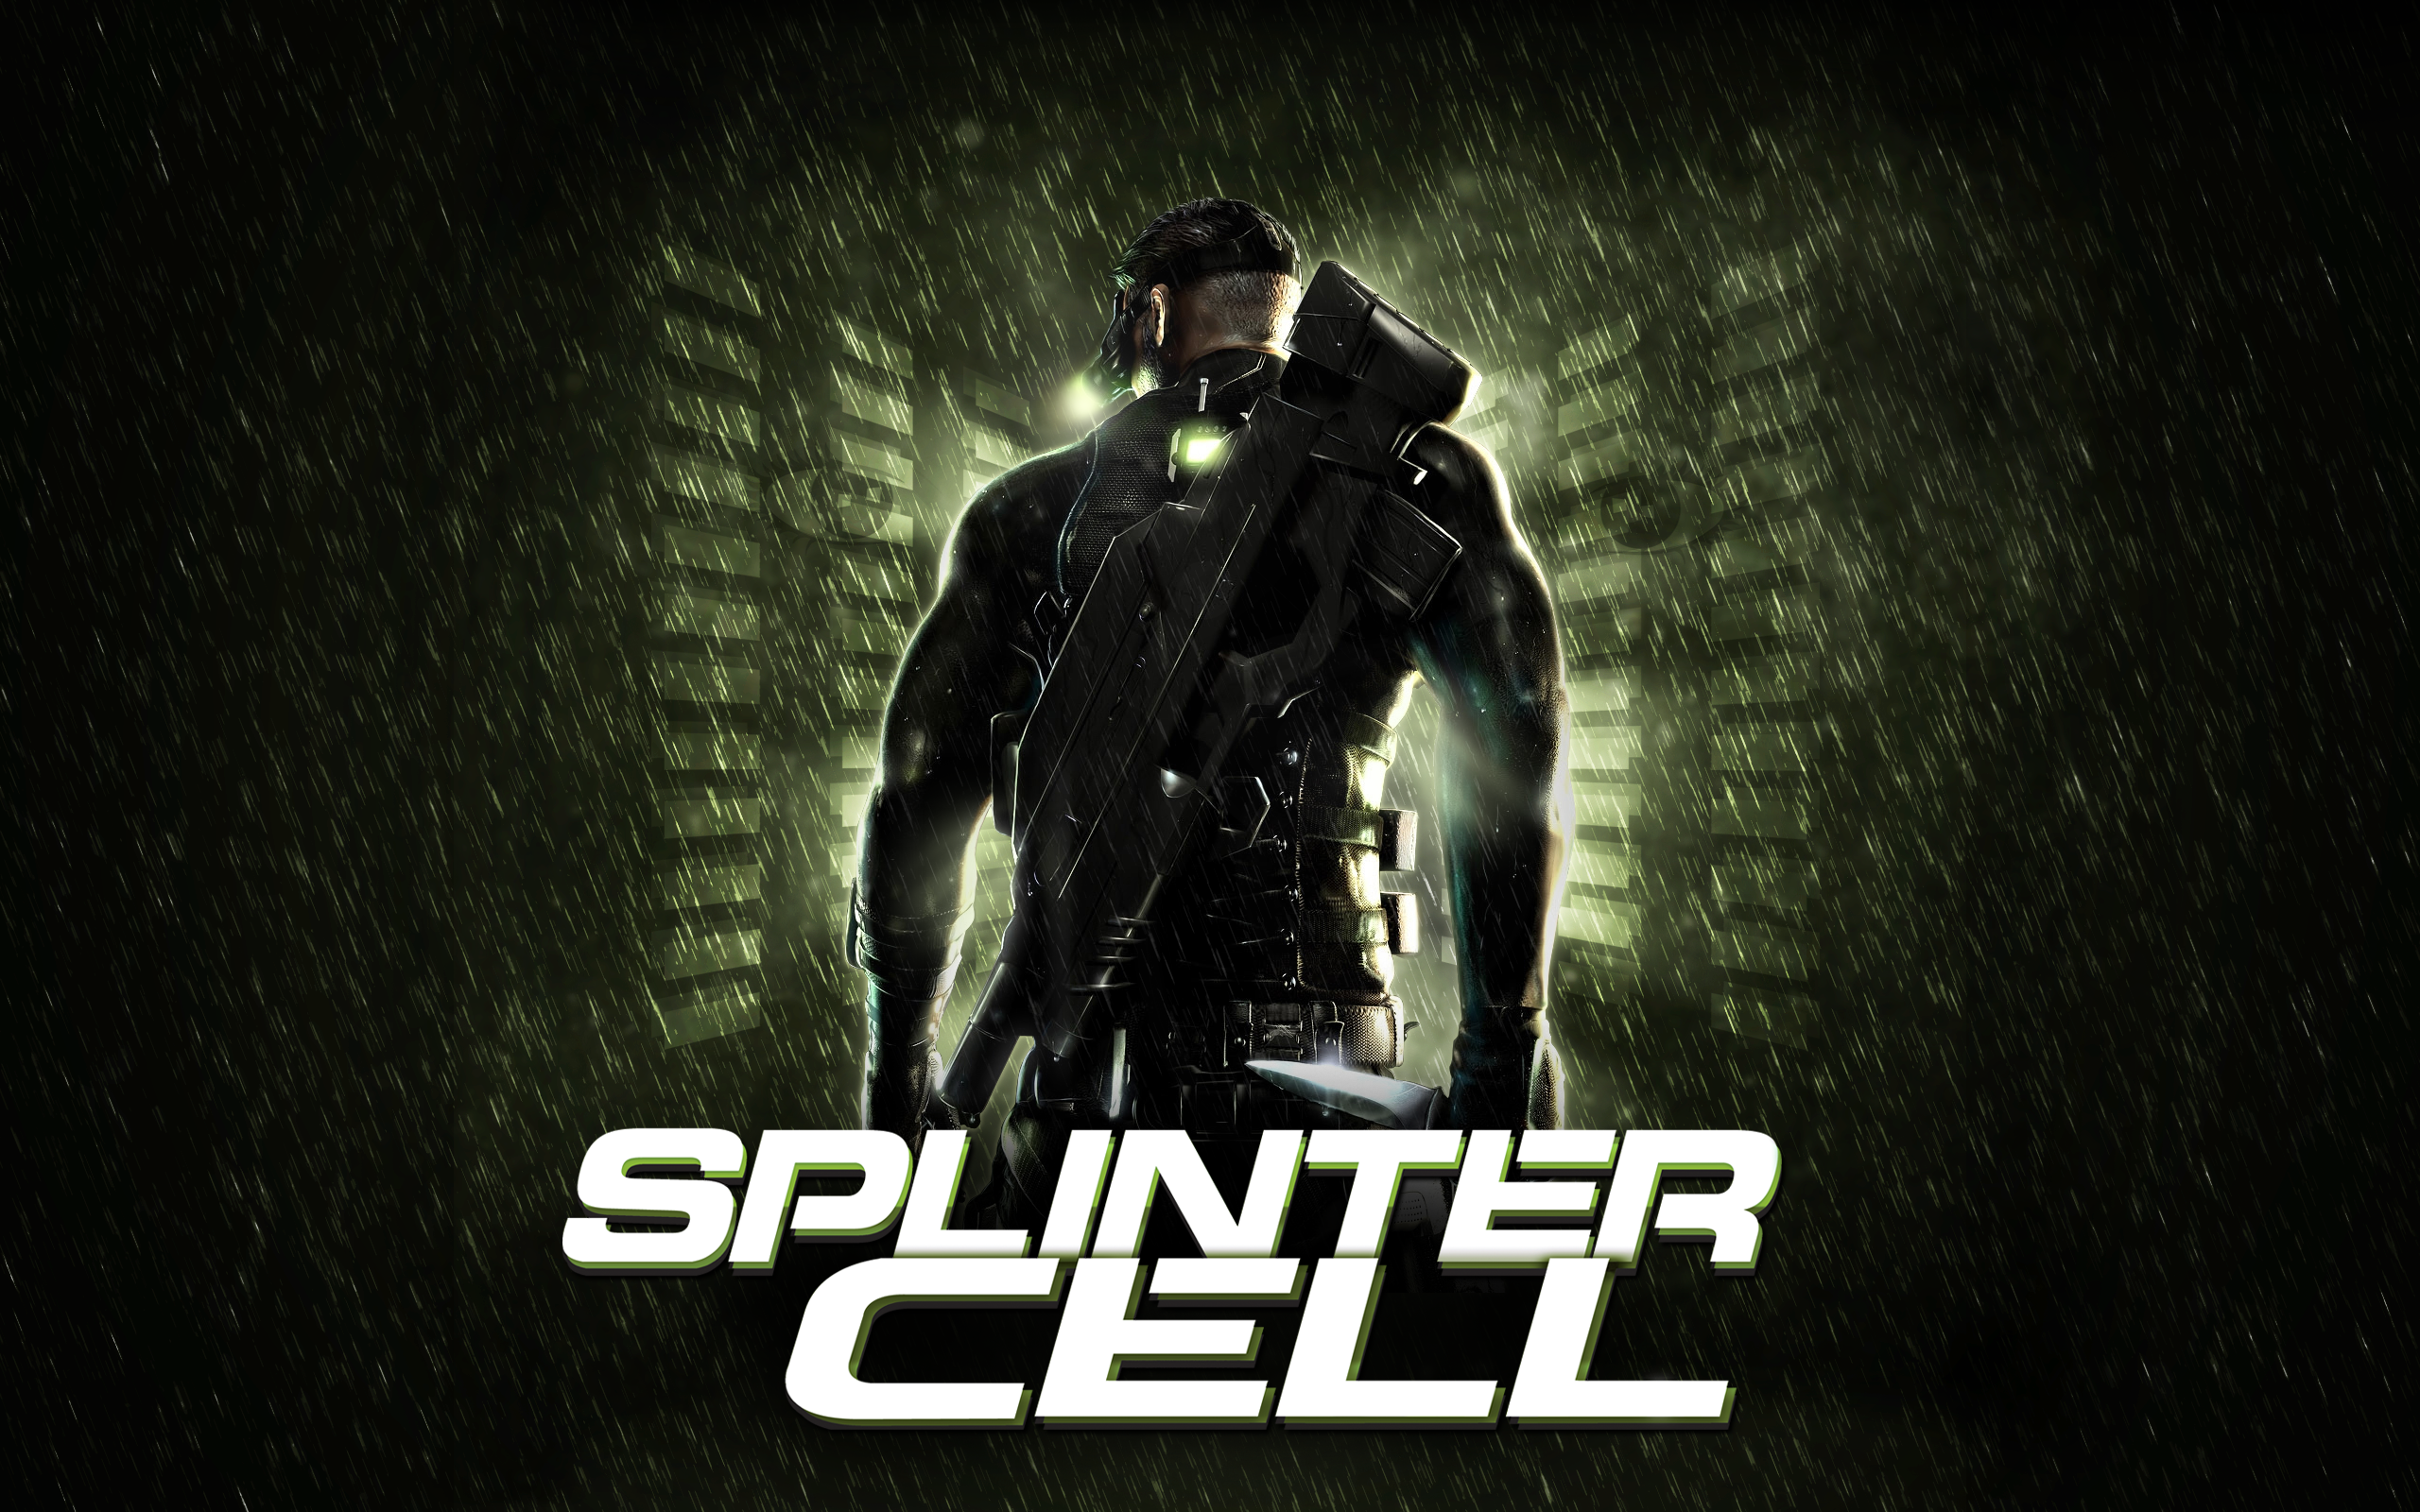 75% Tom Clancy's Splinter Cell® on